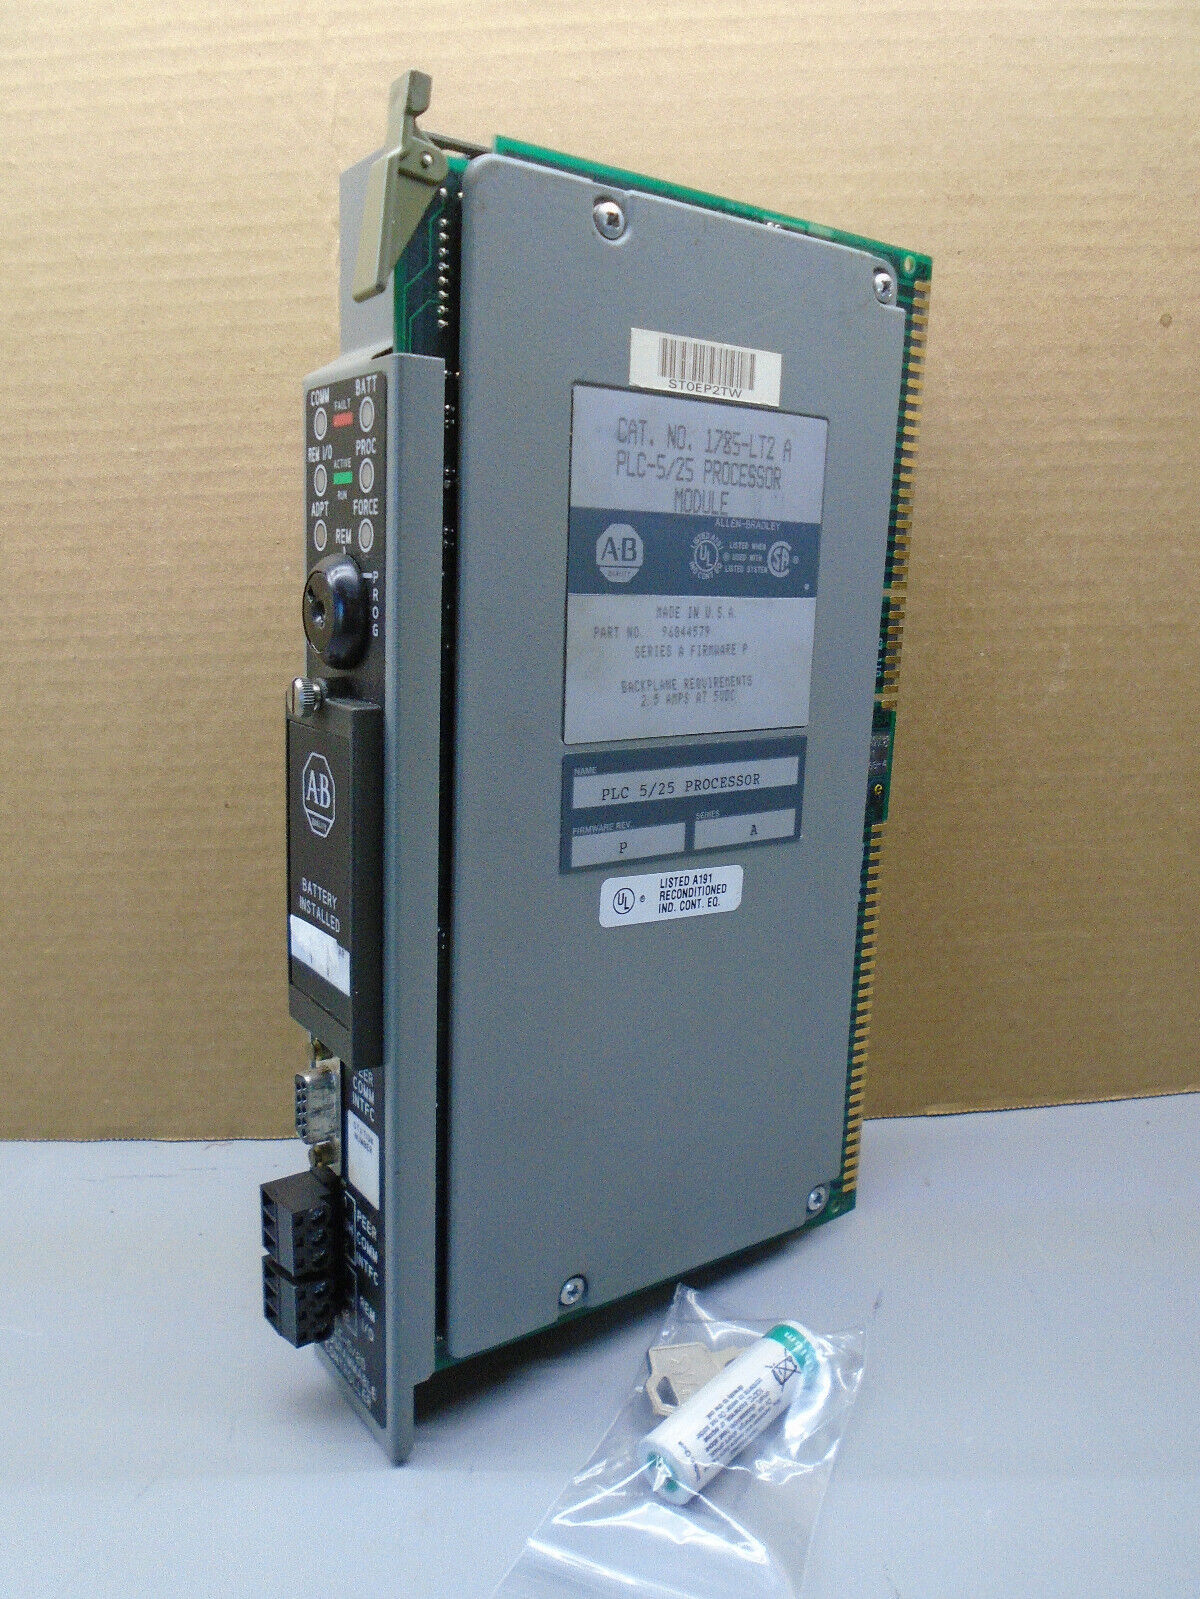 1785-LT2 A  Frn P  Allen Bradley PLC 5 Processor 1785LT2A    N537